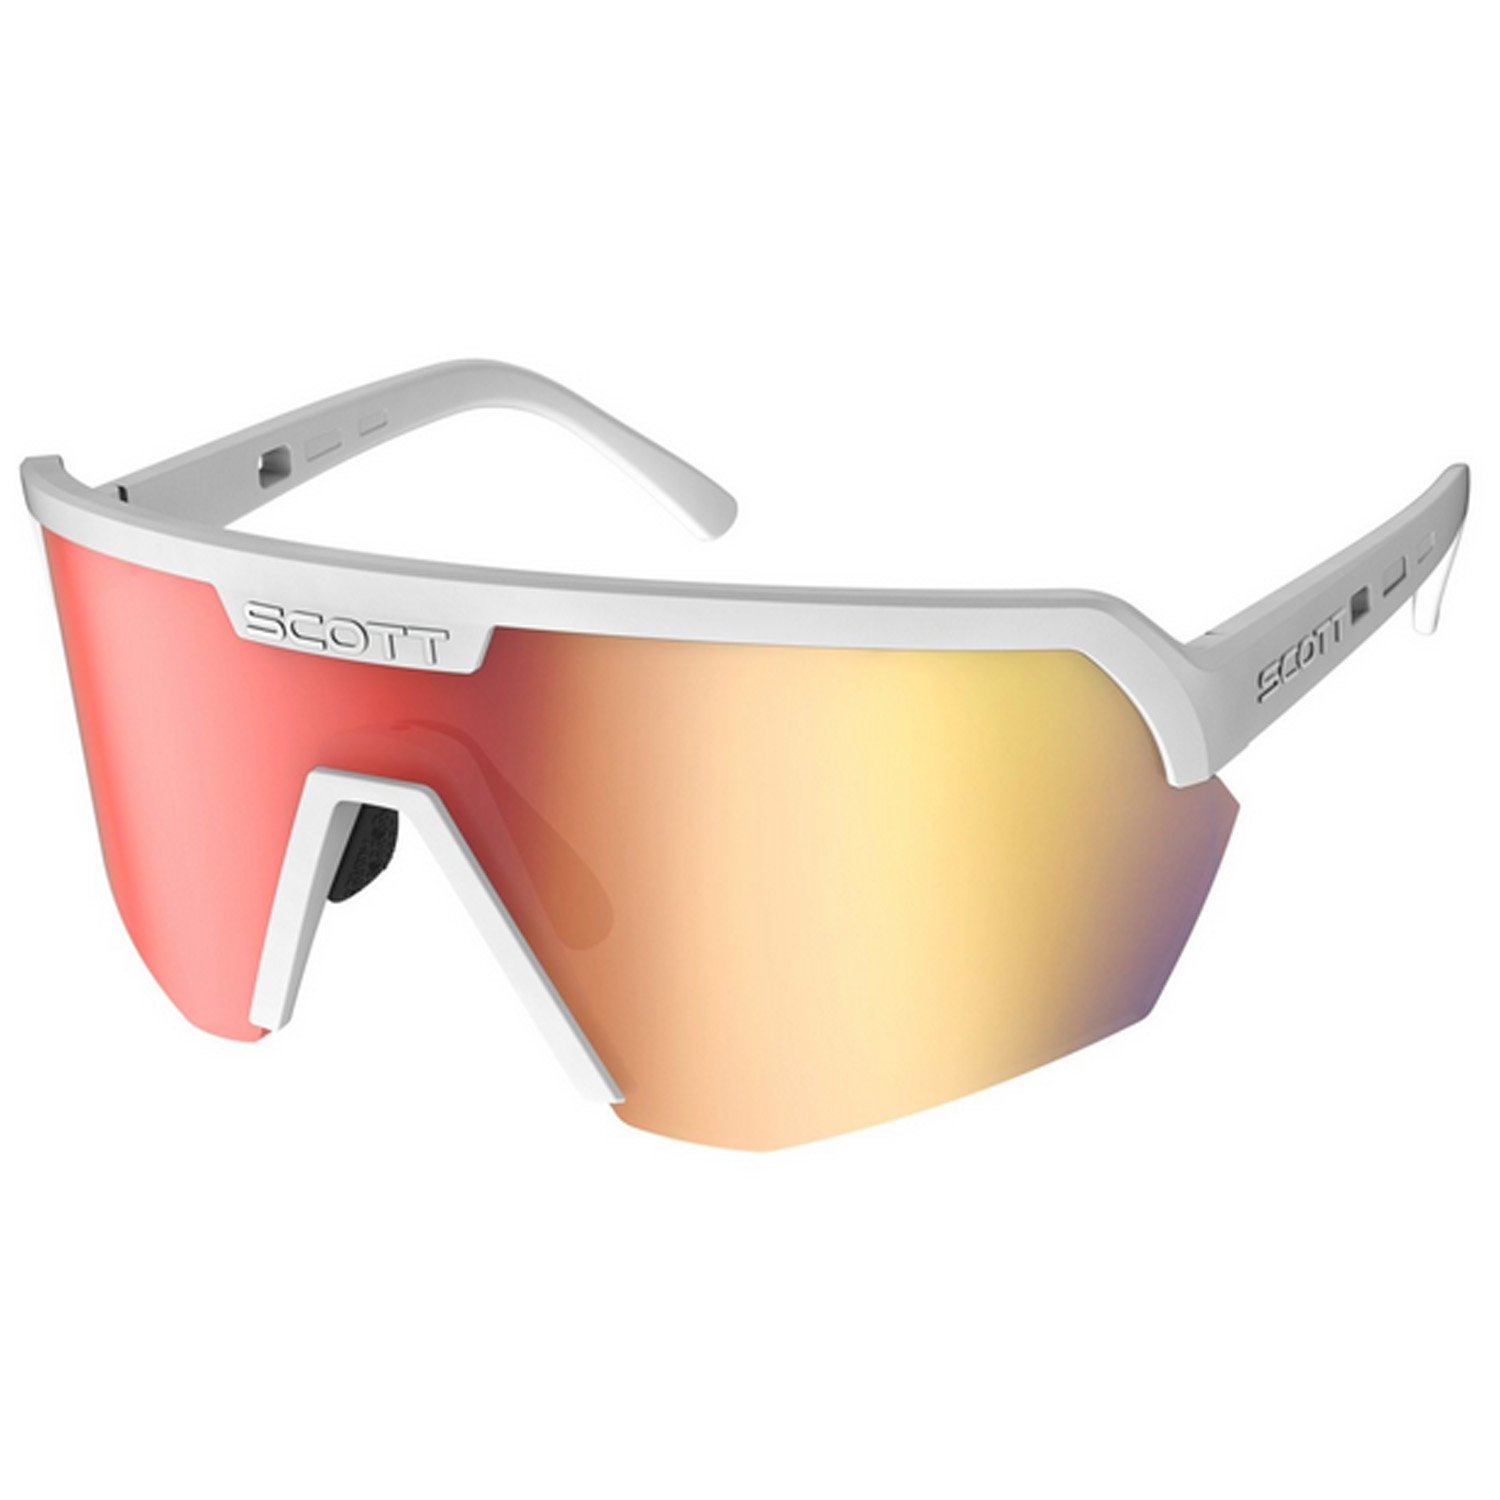 Очки велосипедные SCOTT Sport Shield, white matt/red chrome, ES281188-0196192 очки солнцезащитные white swan